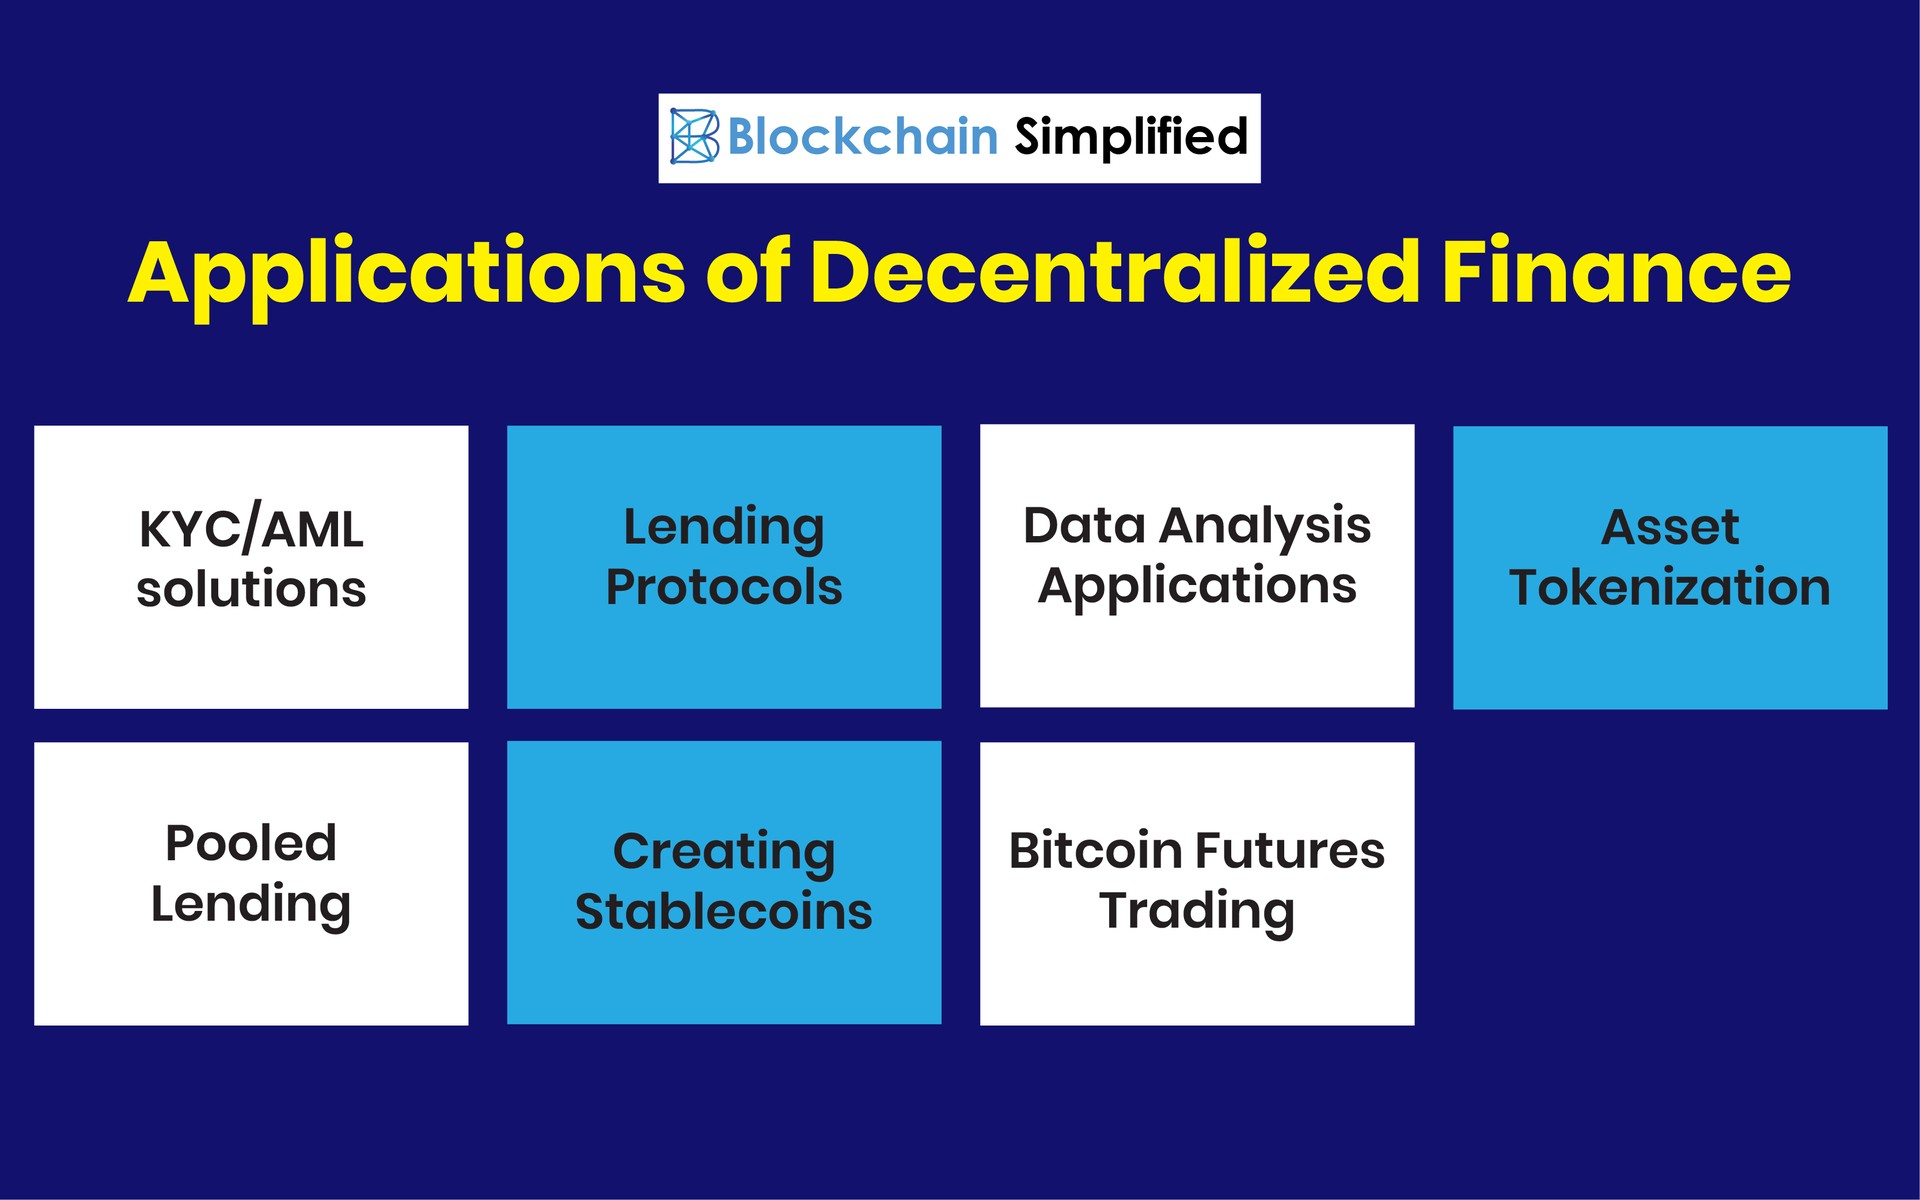 Decentralized Finance applications